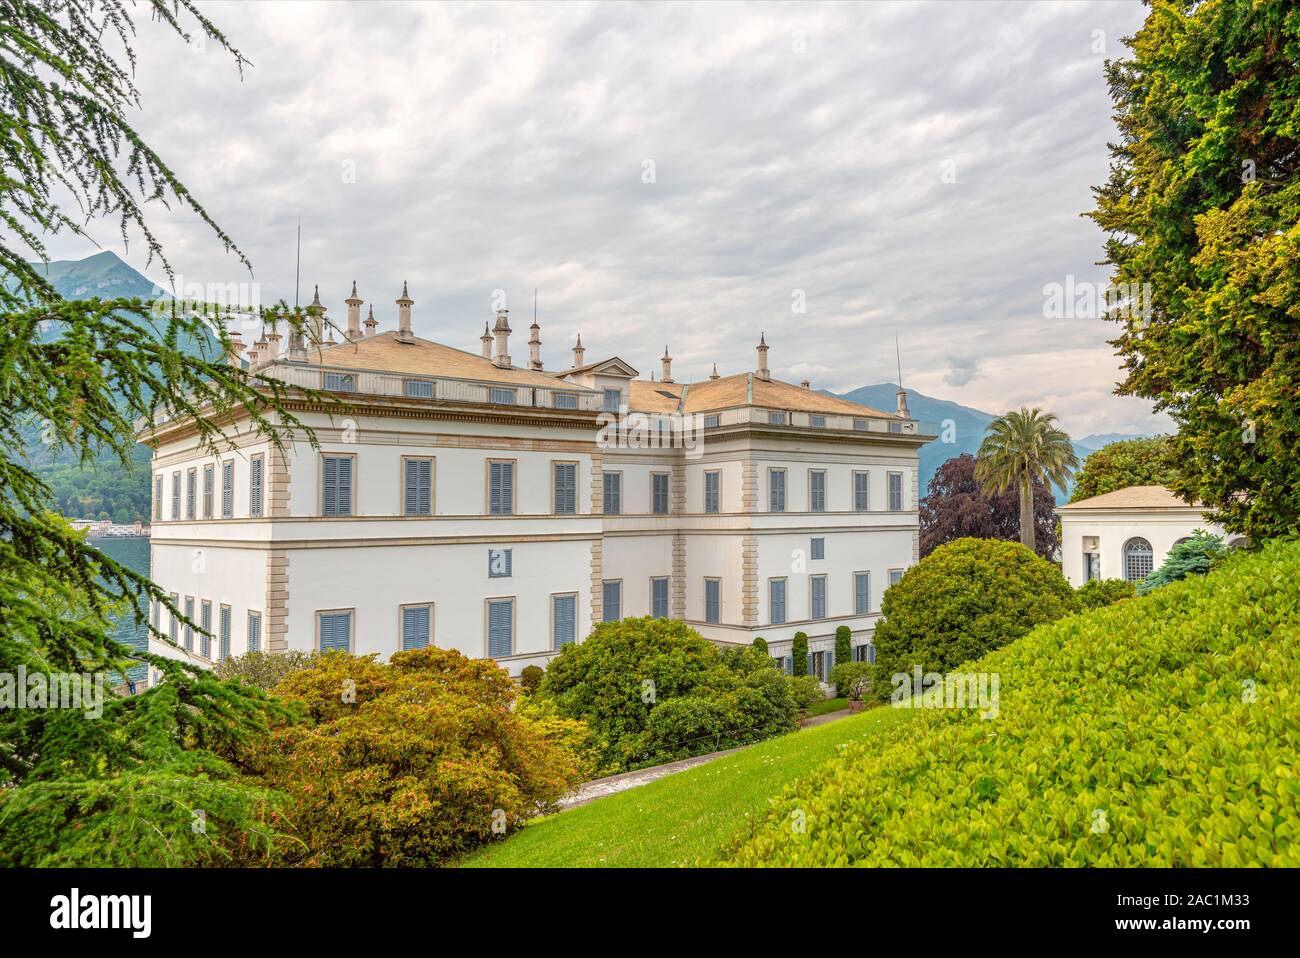 Villa Melzi D Eril, Bellagio, Lake Como, Lombardy, Italy Stock Photo